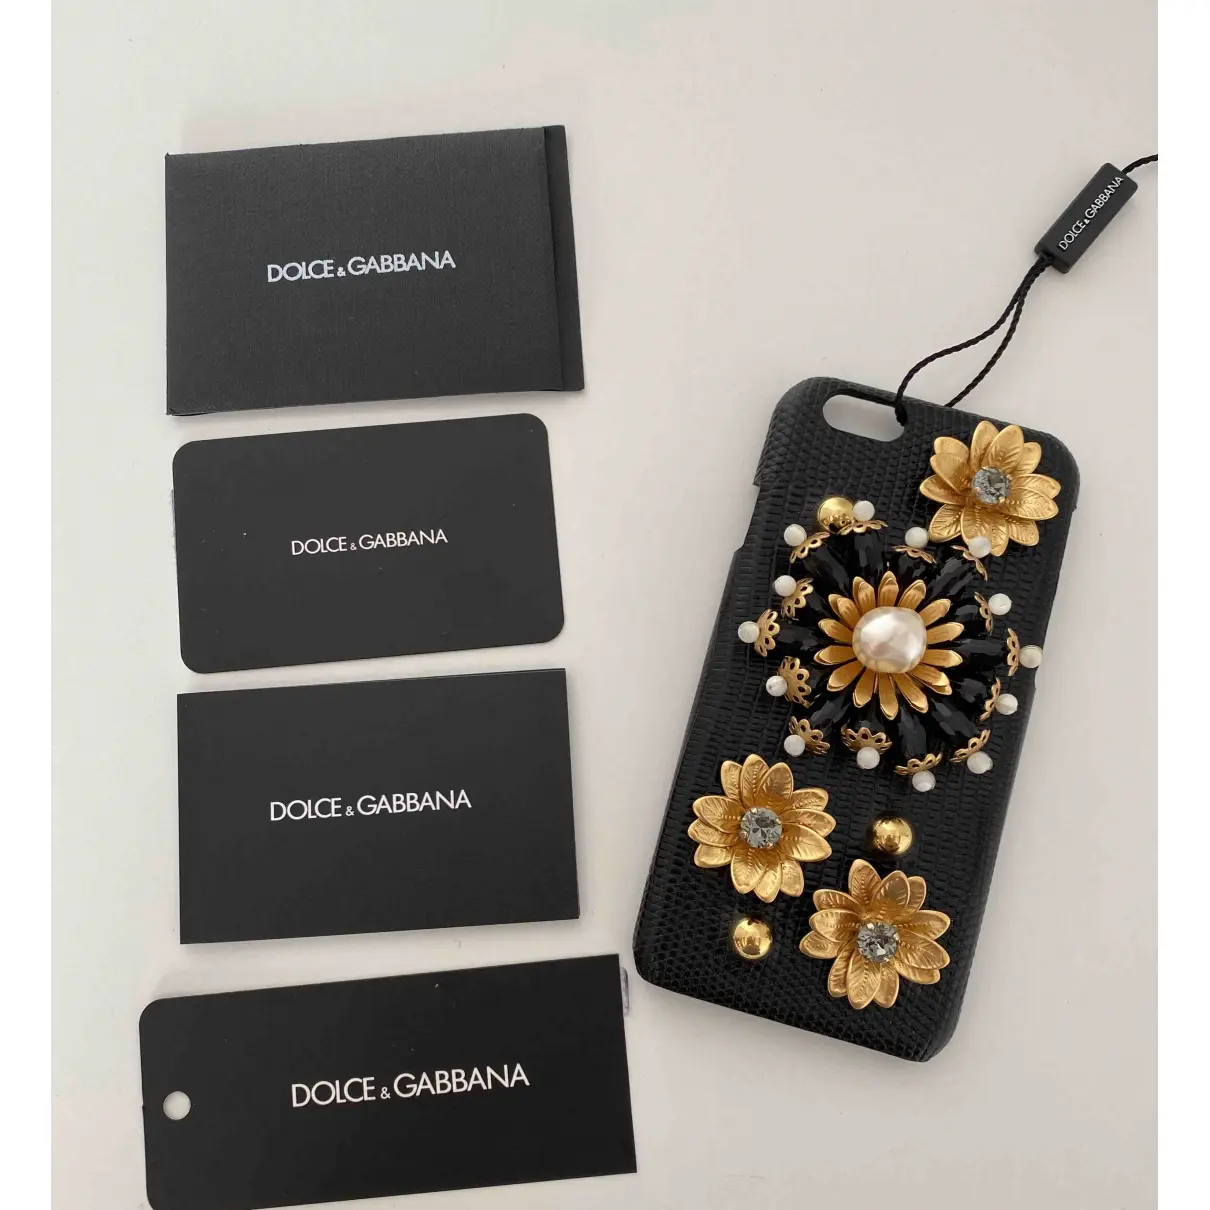 Buy Dolce & Gabbana Iphone case online